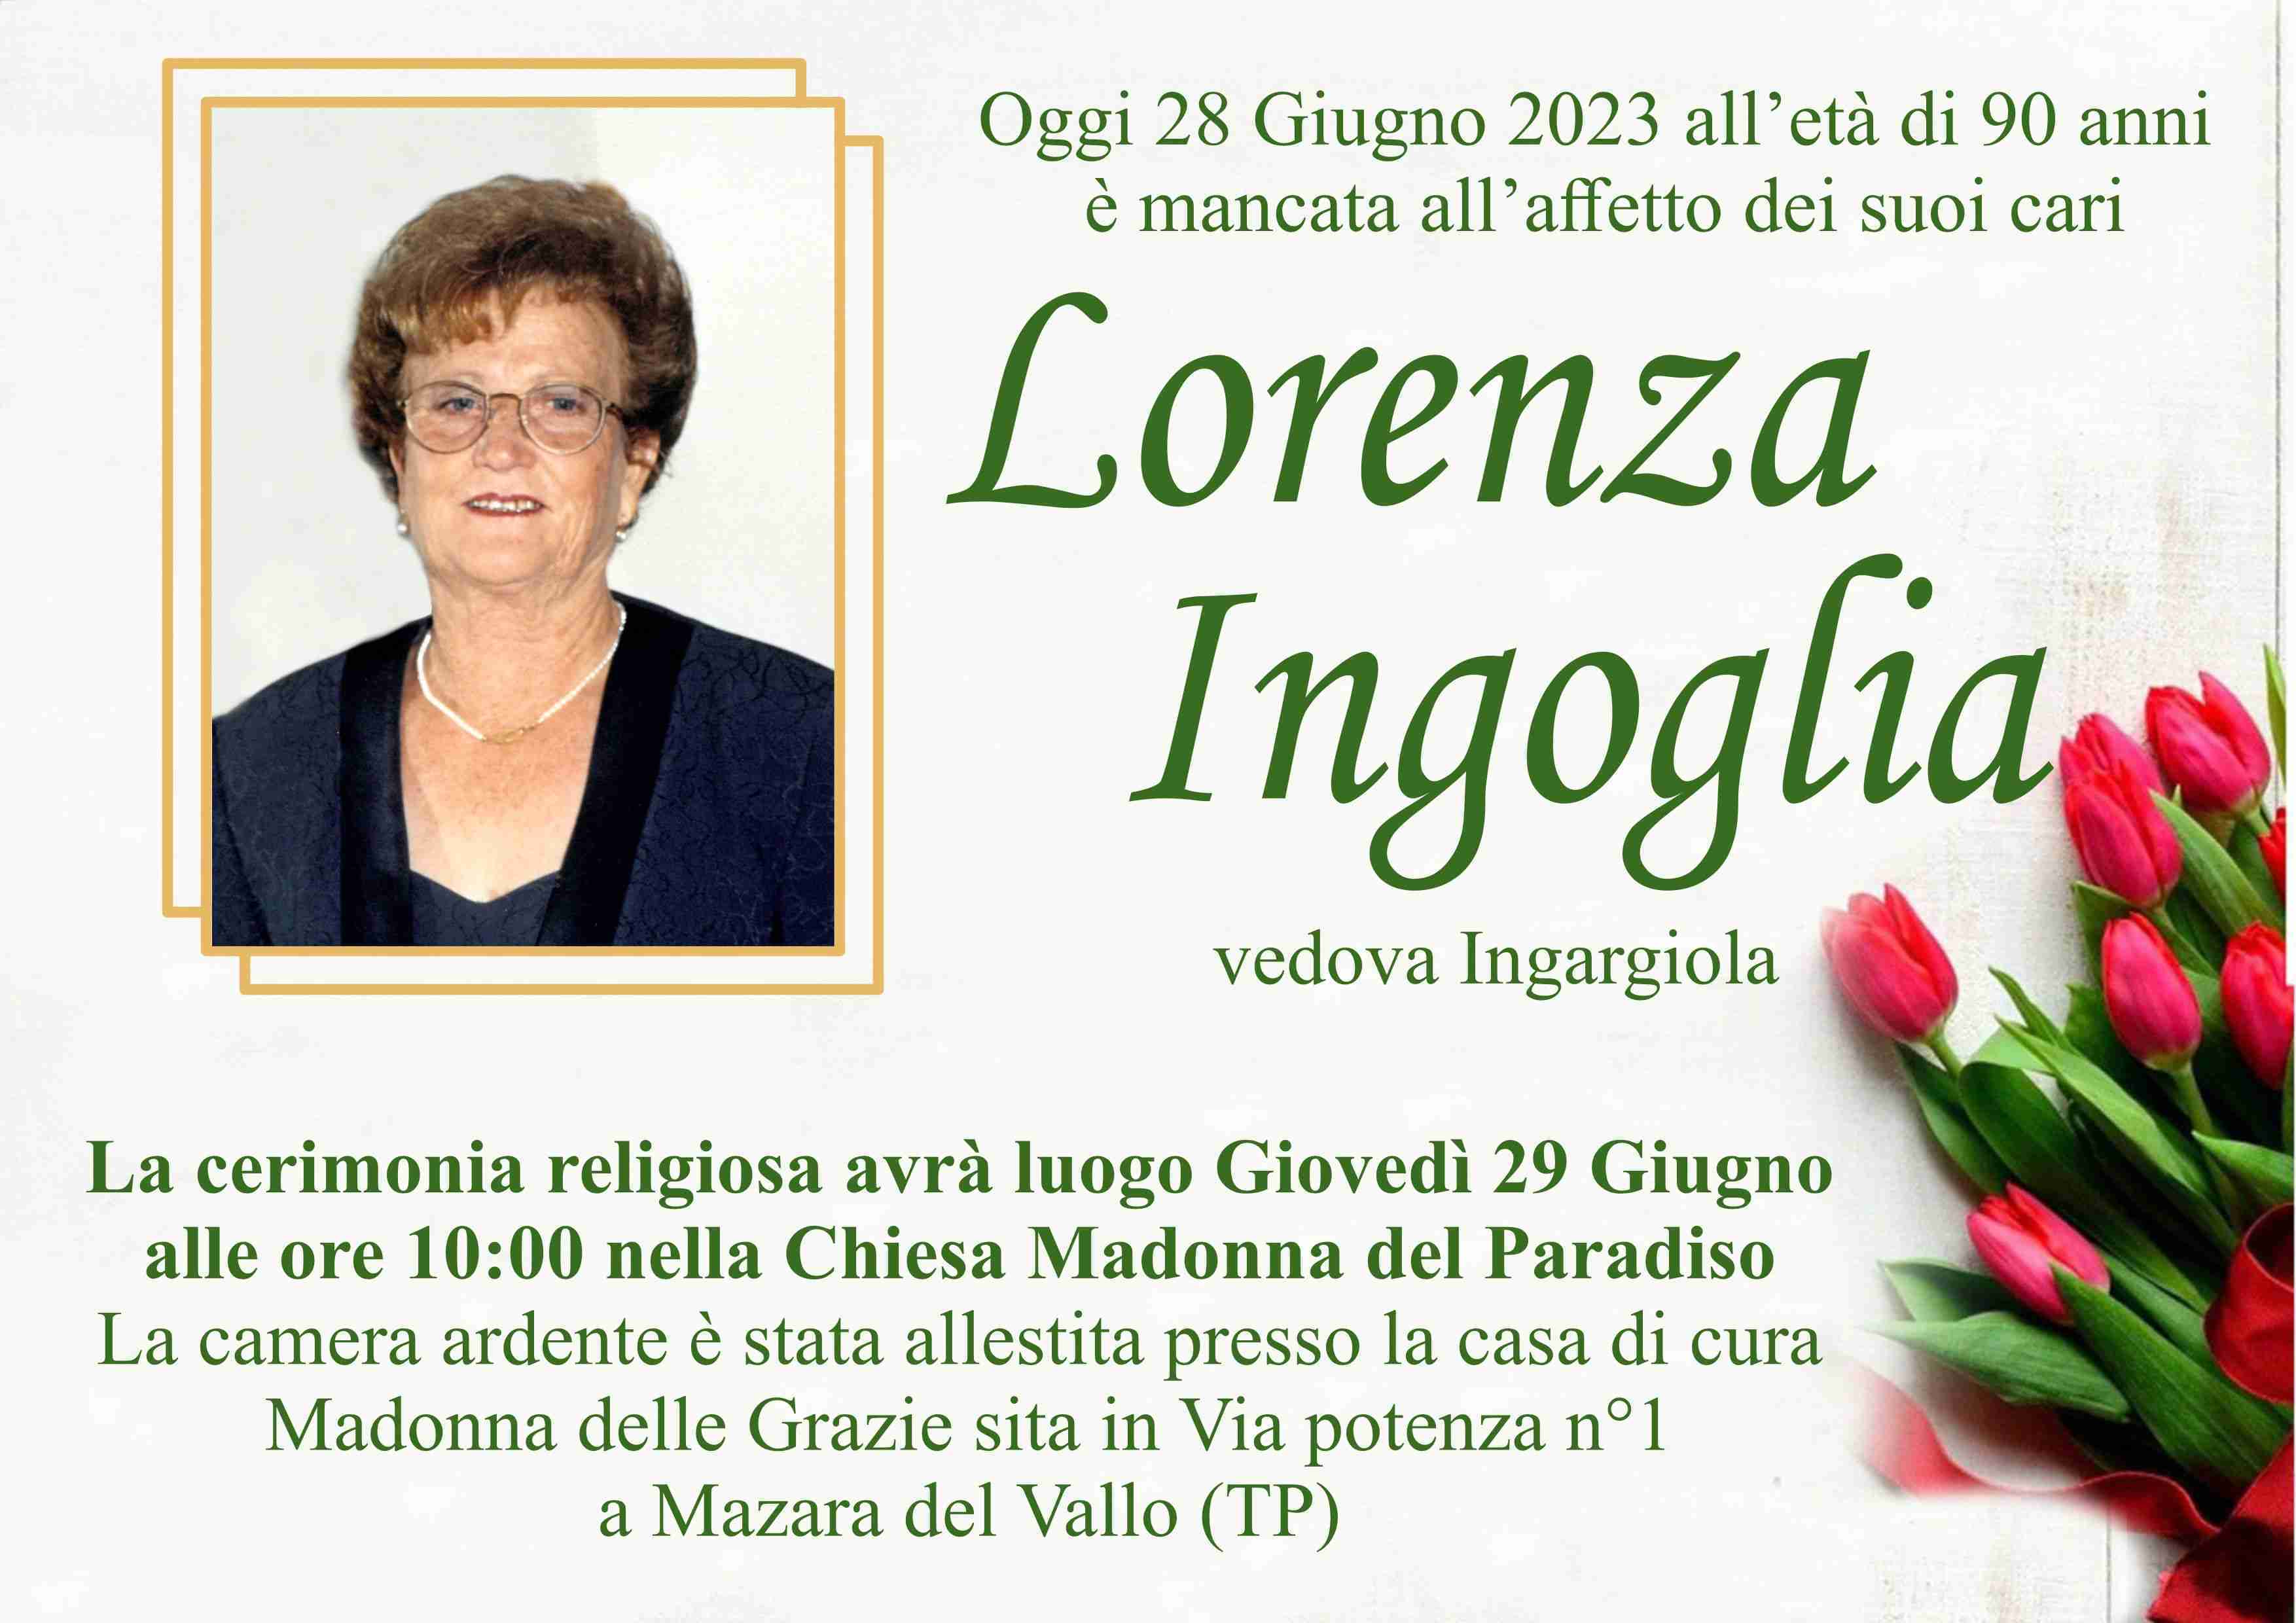 Lorenza Ingoglia